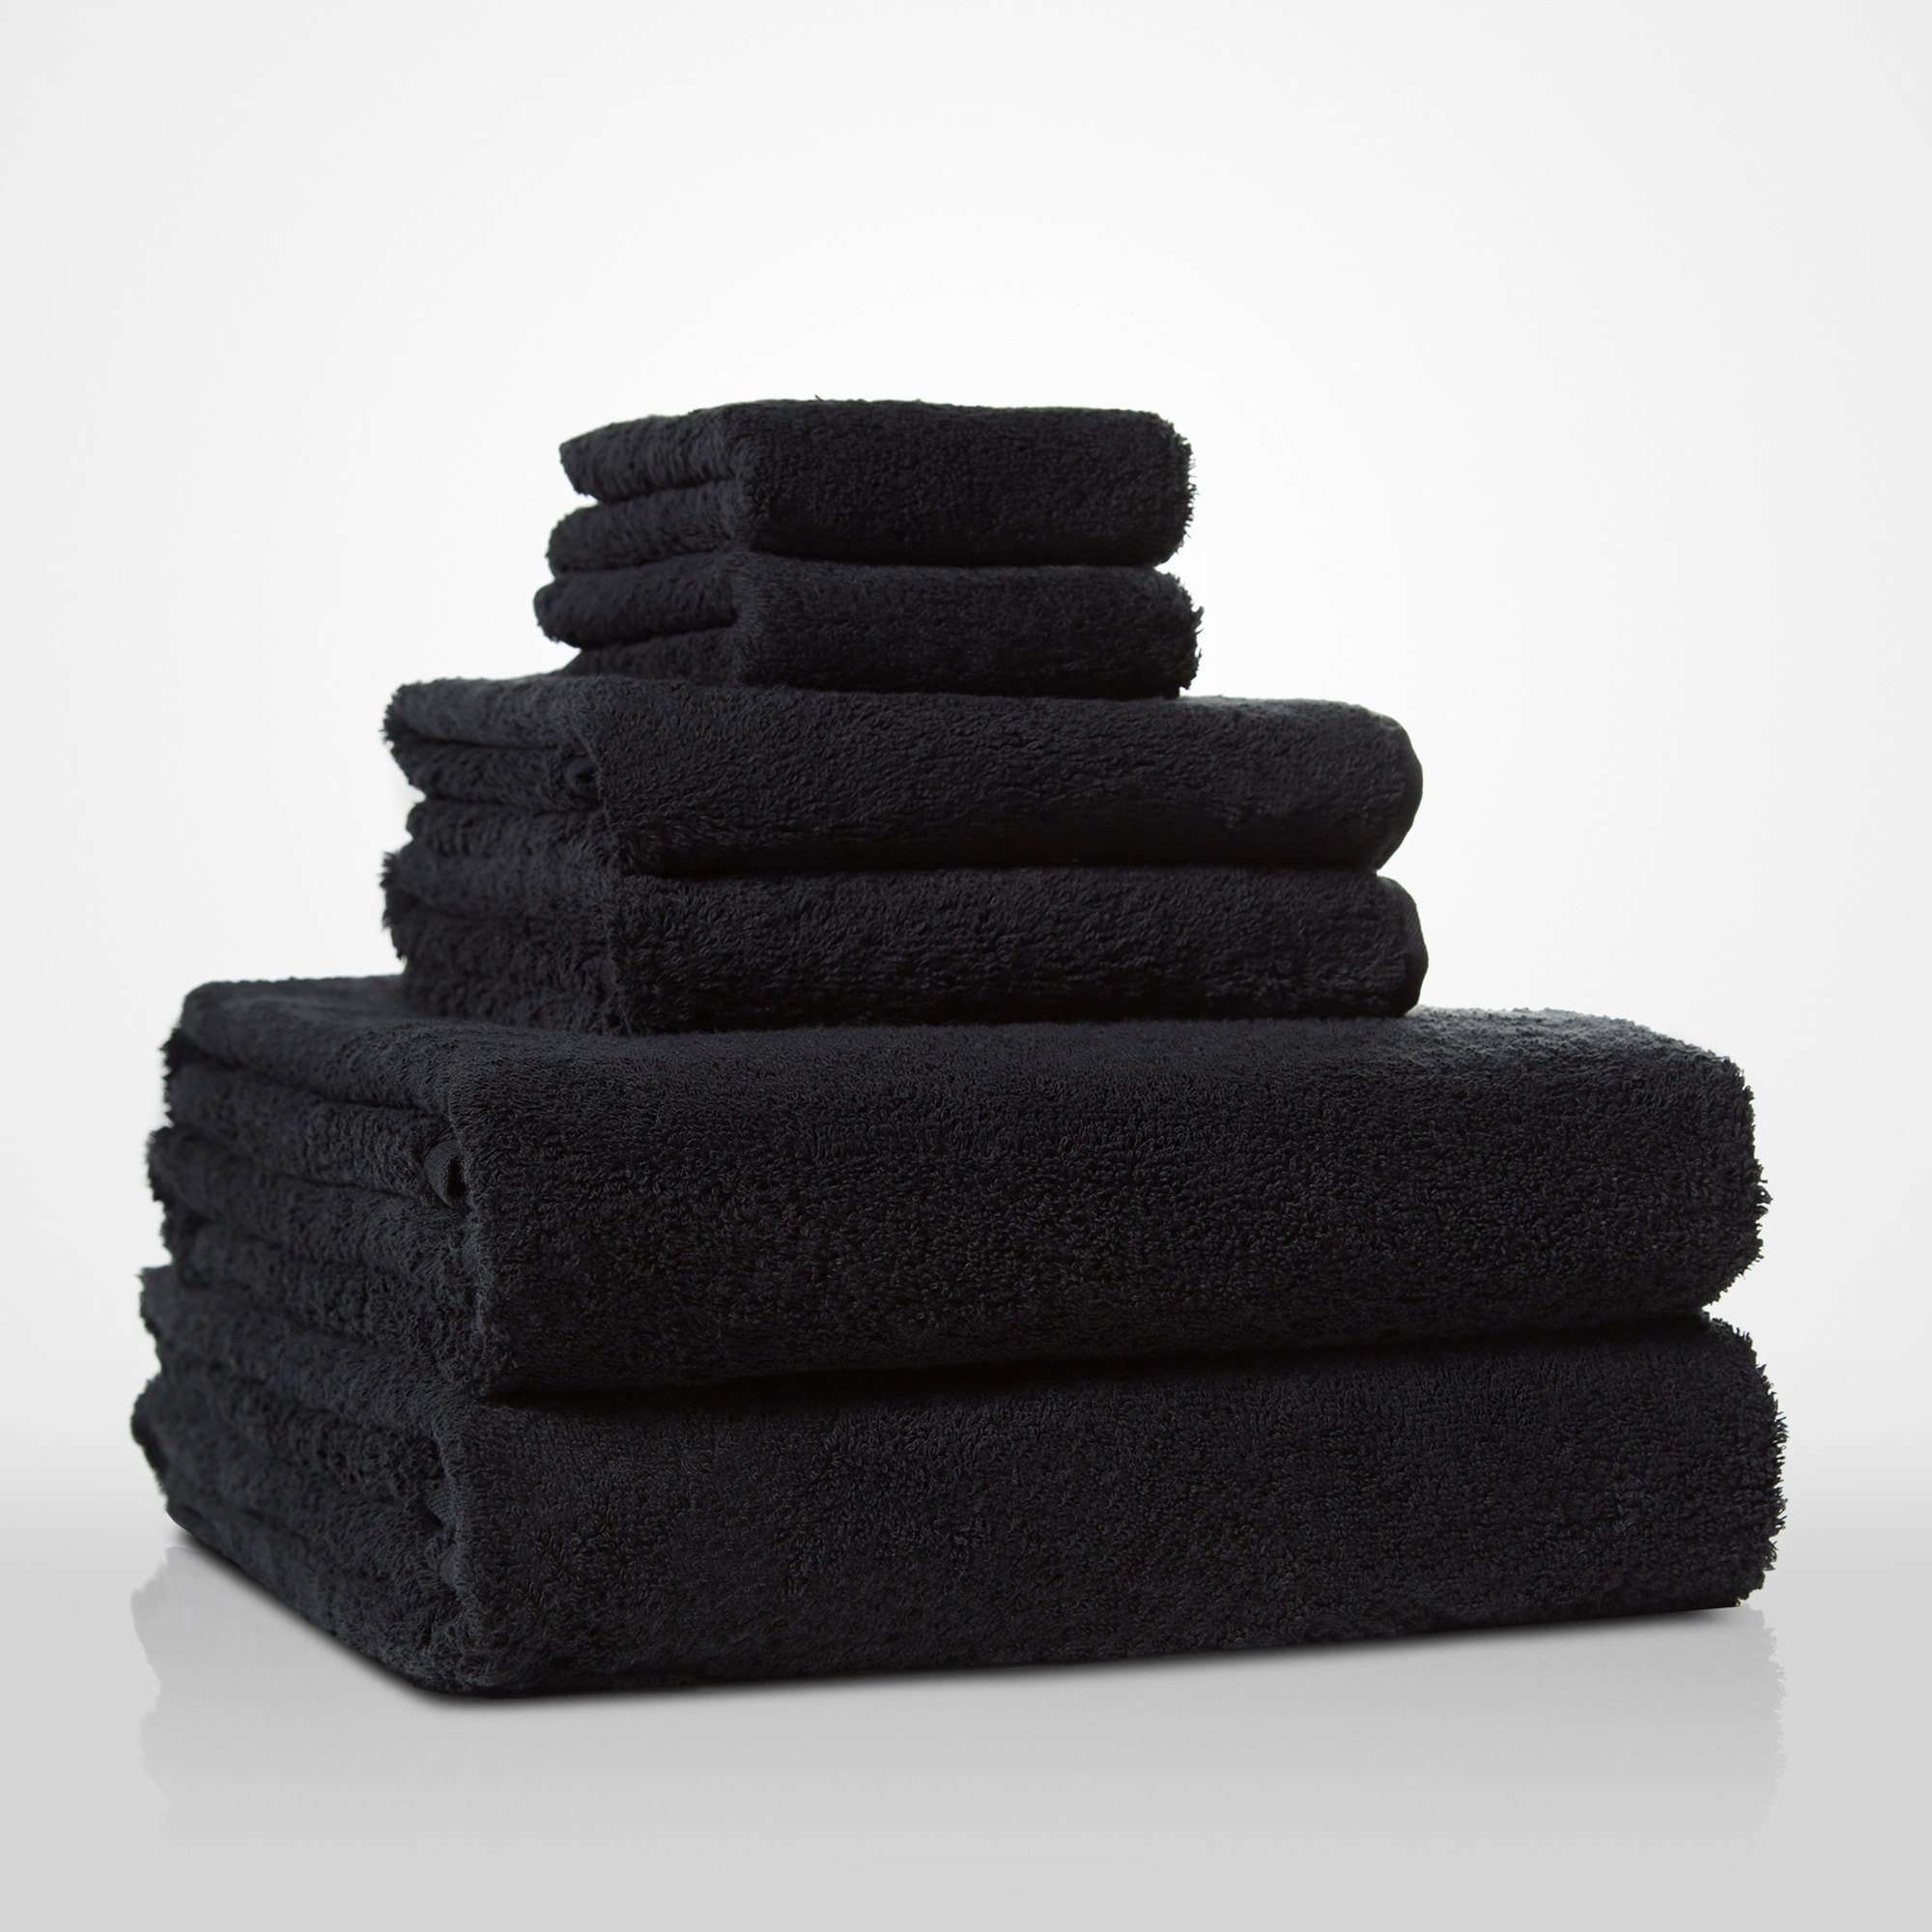 35"x 60" - 100% Turkish Cotton Black Terry Bath Towel-Robemart.com